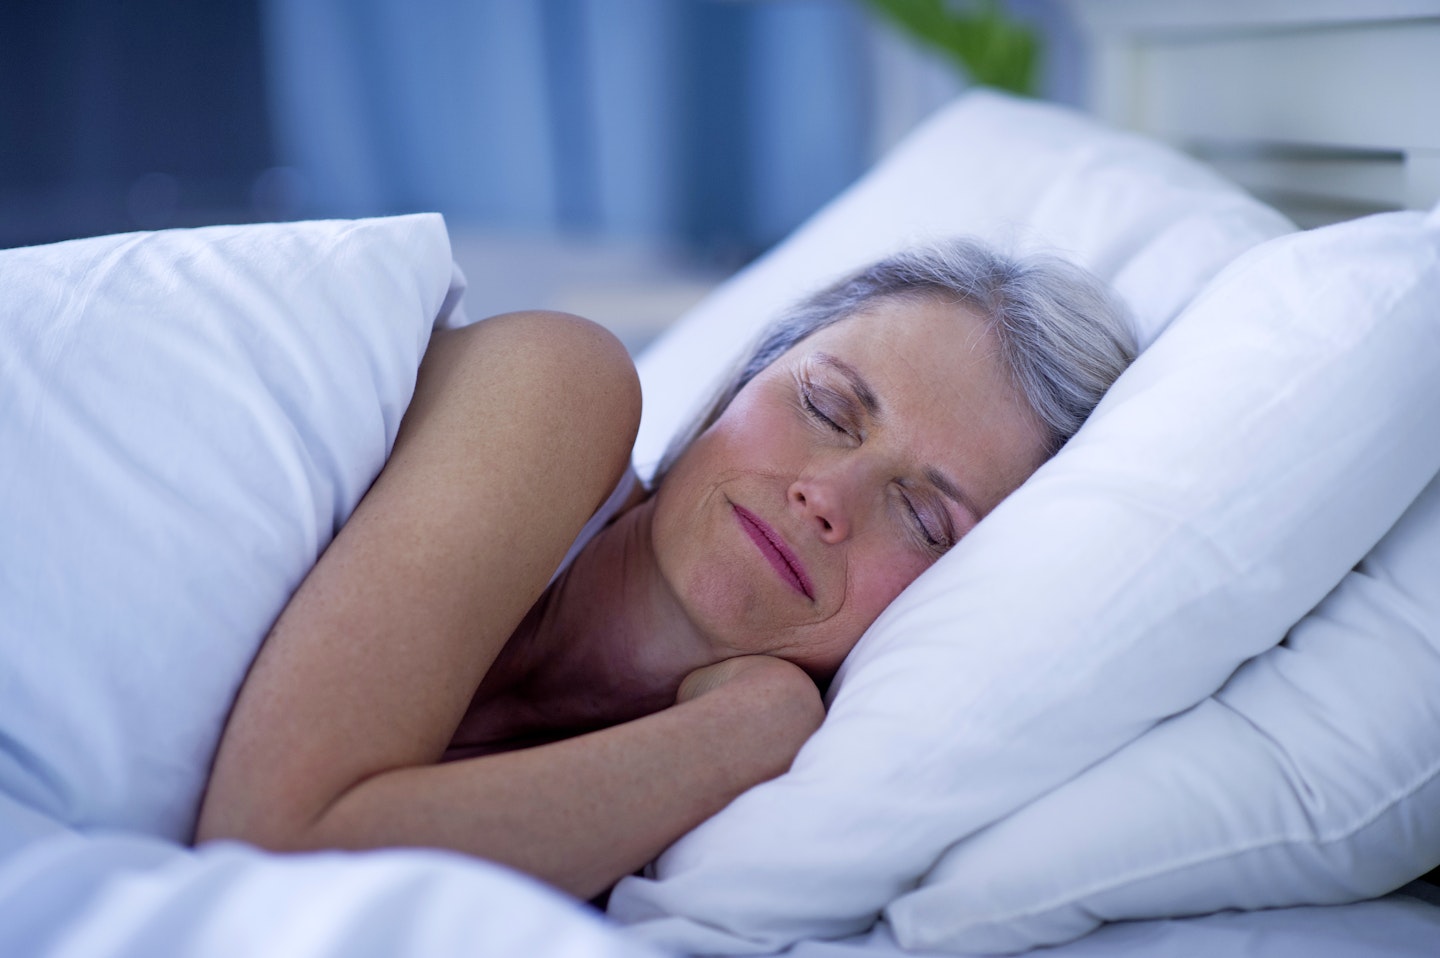 4 ways to fall asleep fast